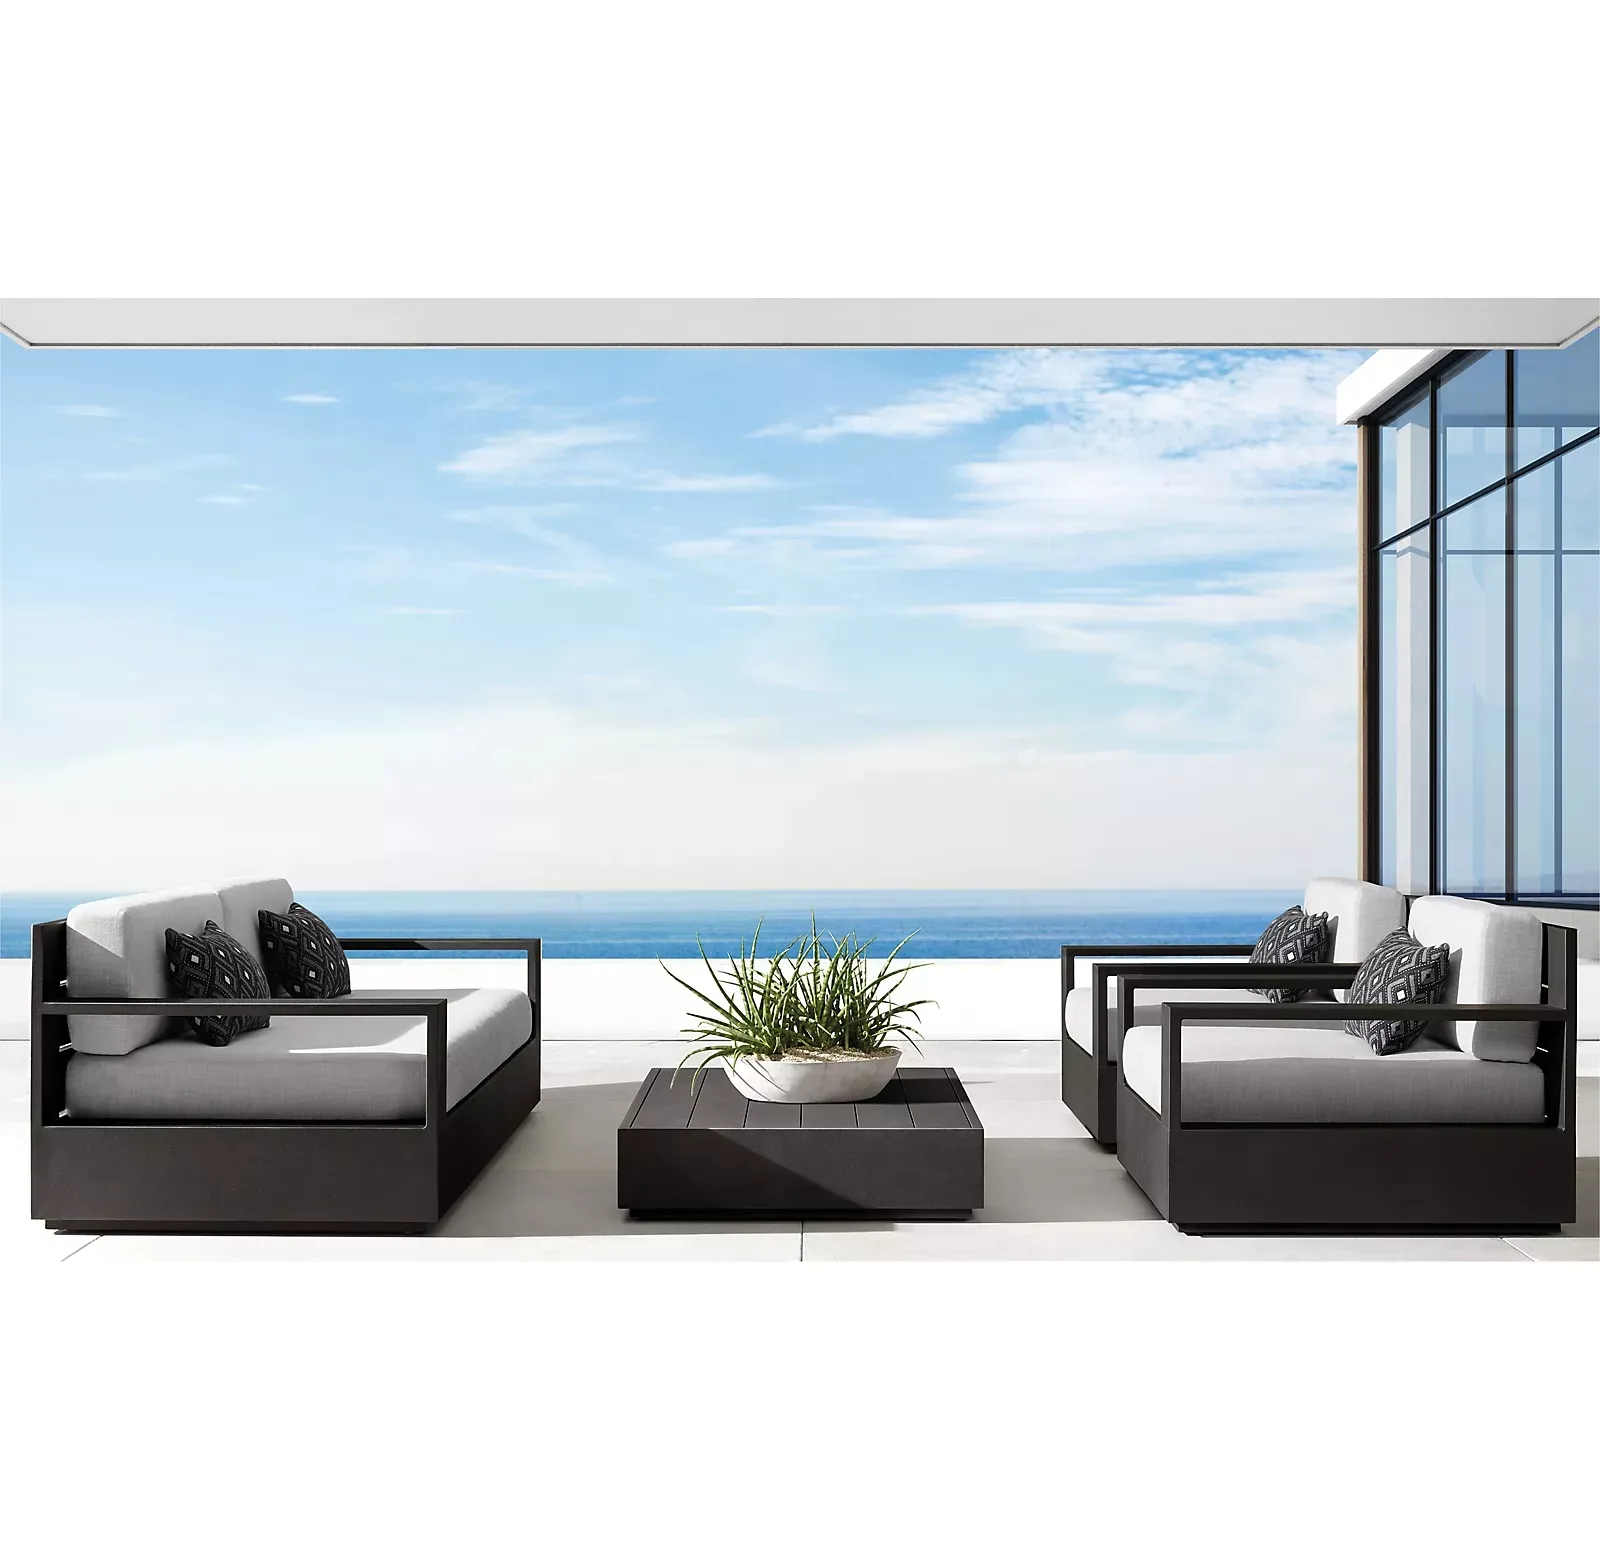 New arrival lounge chair outdoor sofa set furniture aluminum outdoor garden sofa